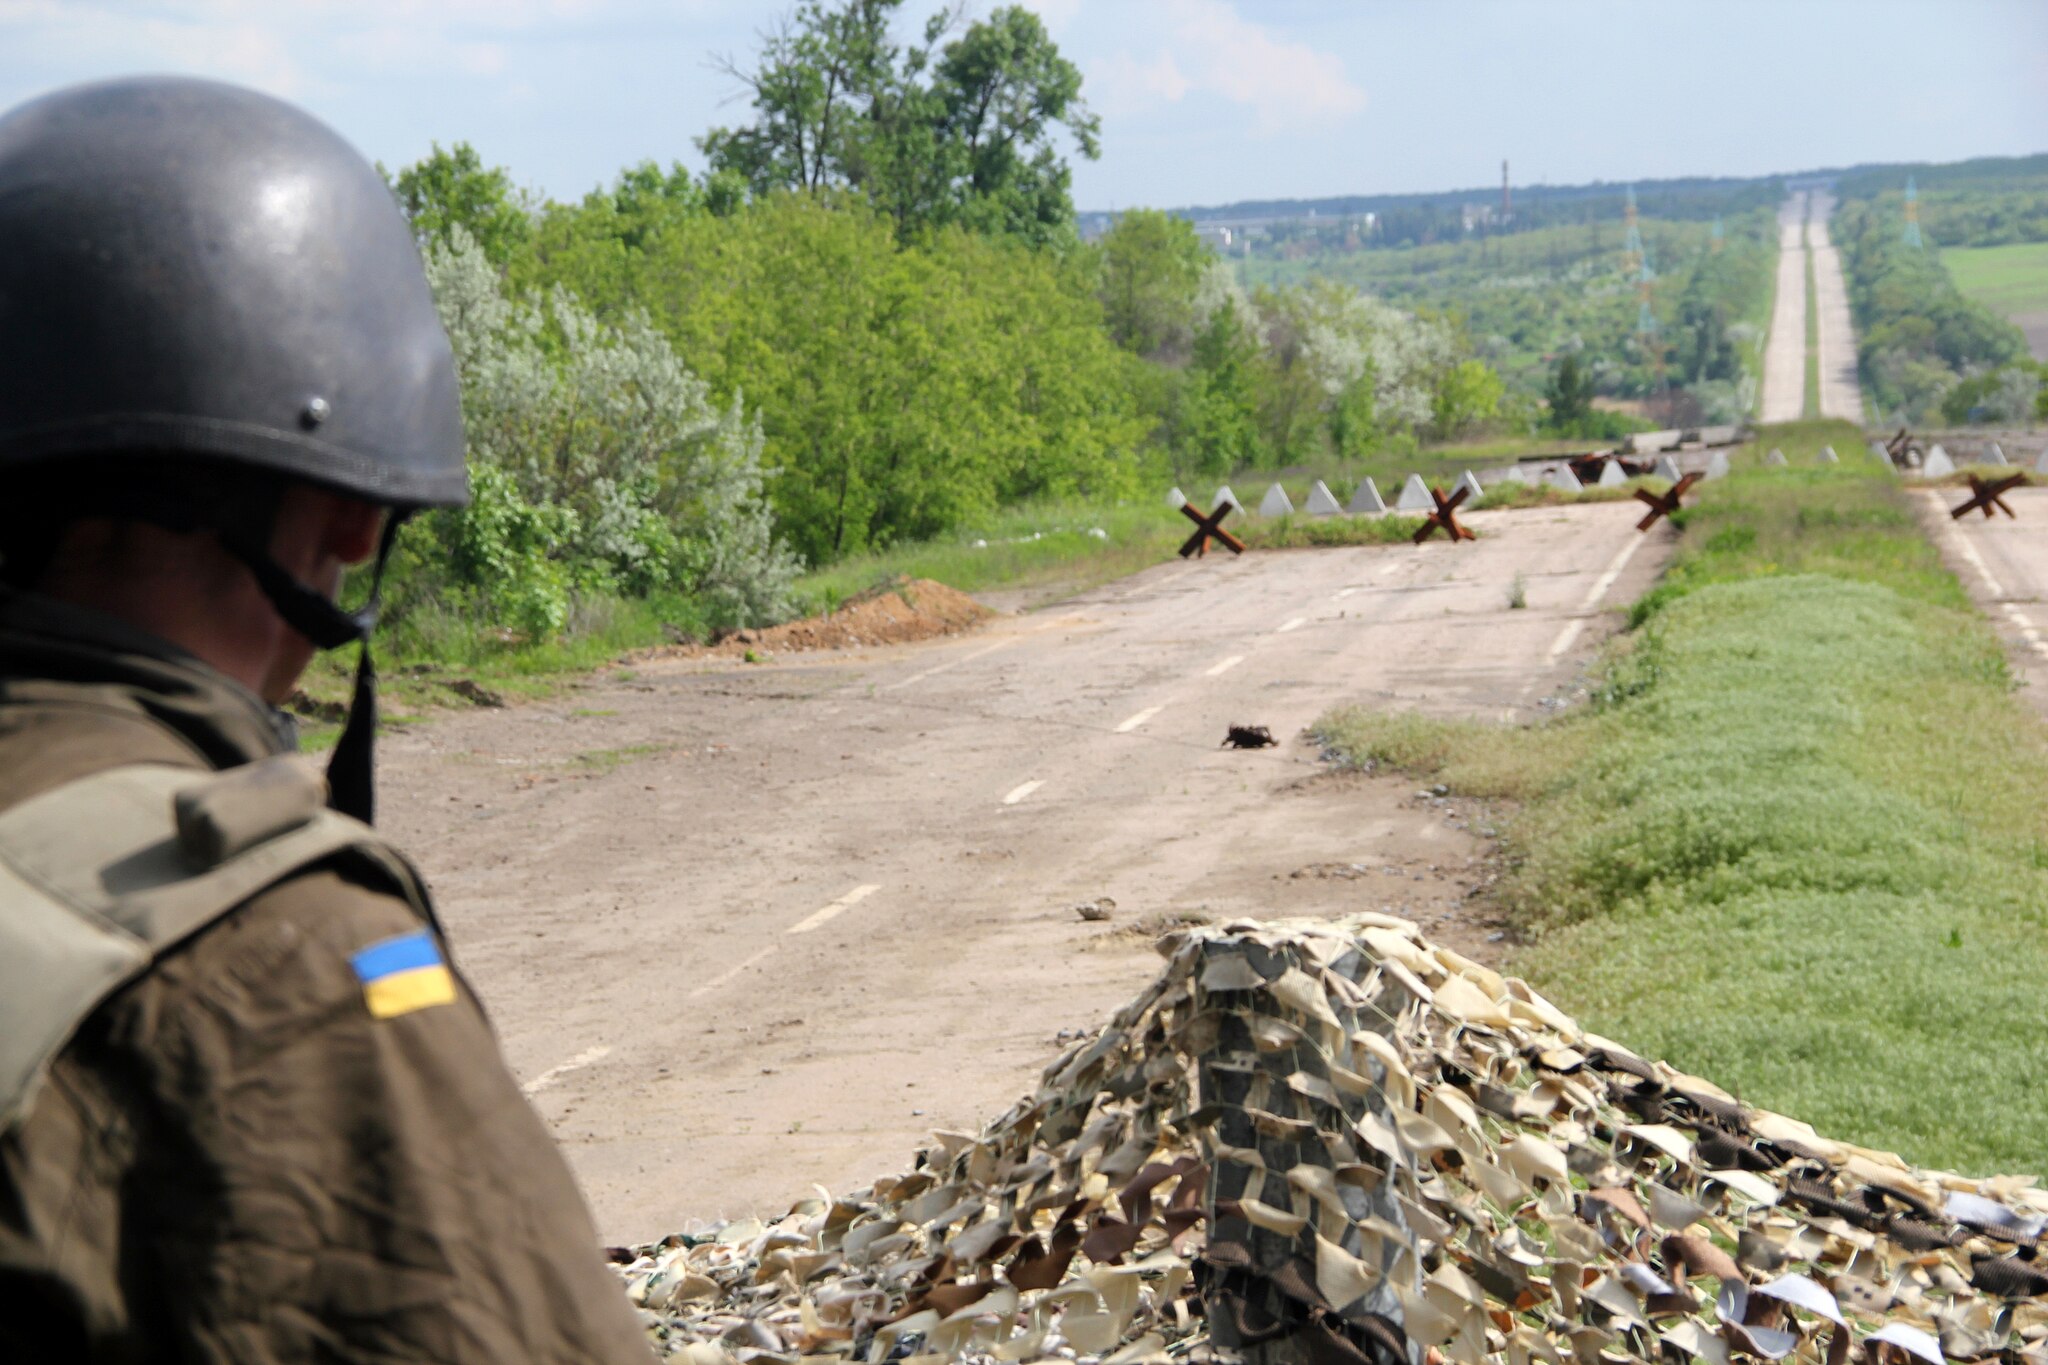 Bild: Ministry of Defense of Ukraine, Peredova on the outskirts of Avdiivka (27449297261), CC BY-SA 2.0, via Wikimedia Commons (keine Änderungen vorgenommen)